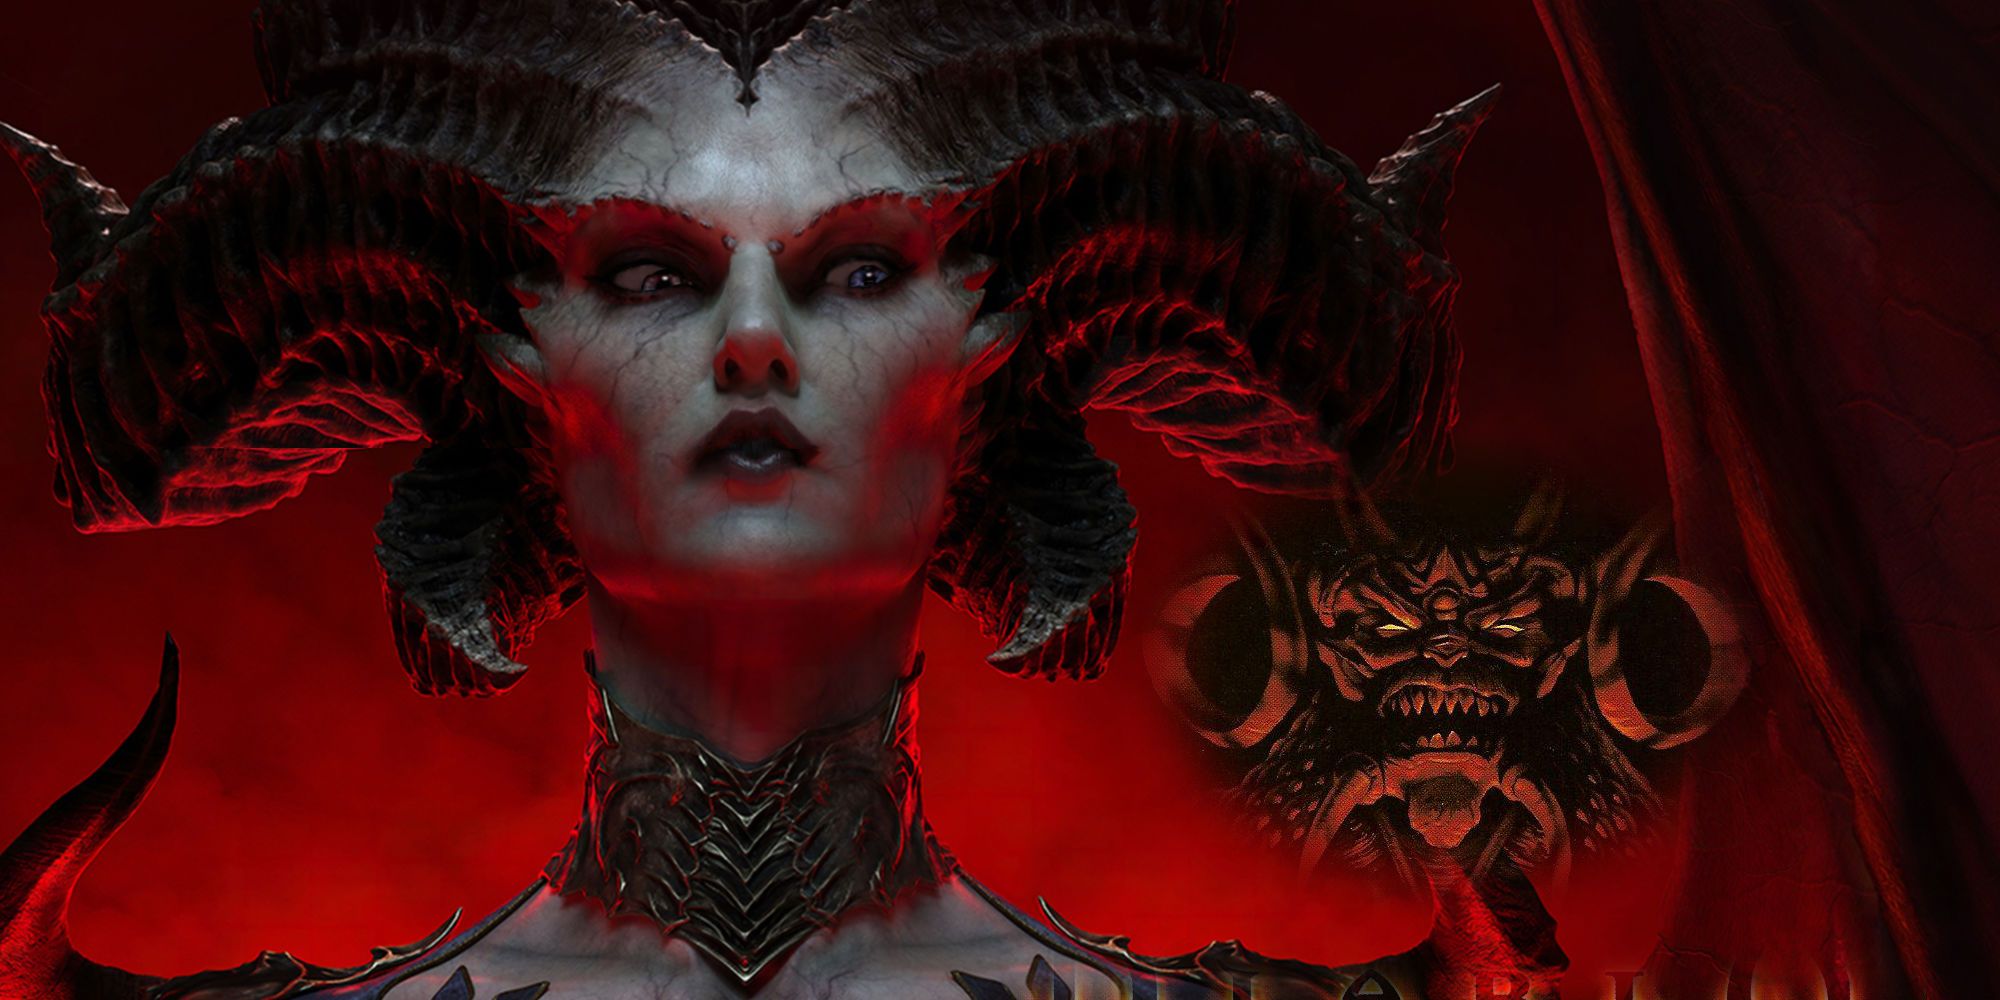 Header image depicting Lilith looking at the original box cover artwork